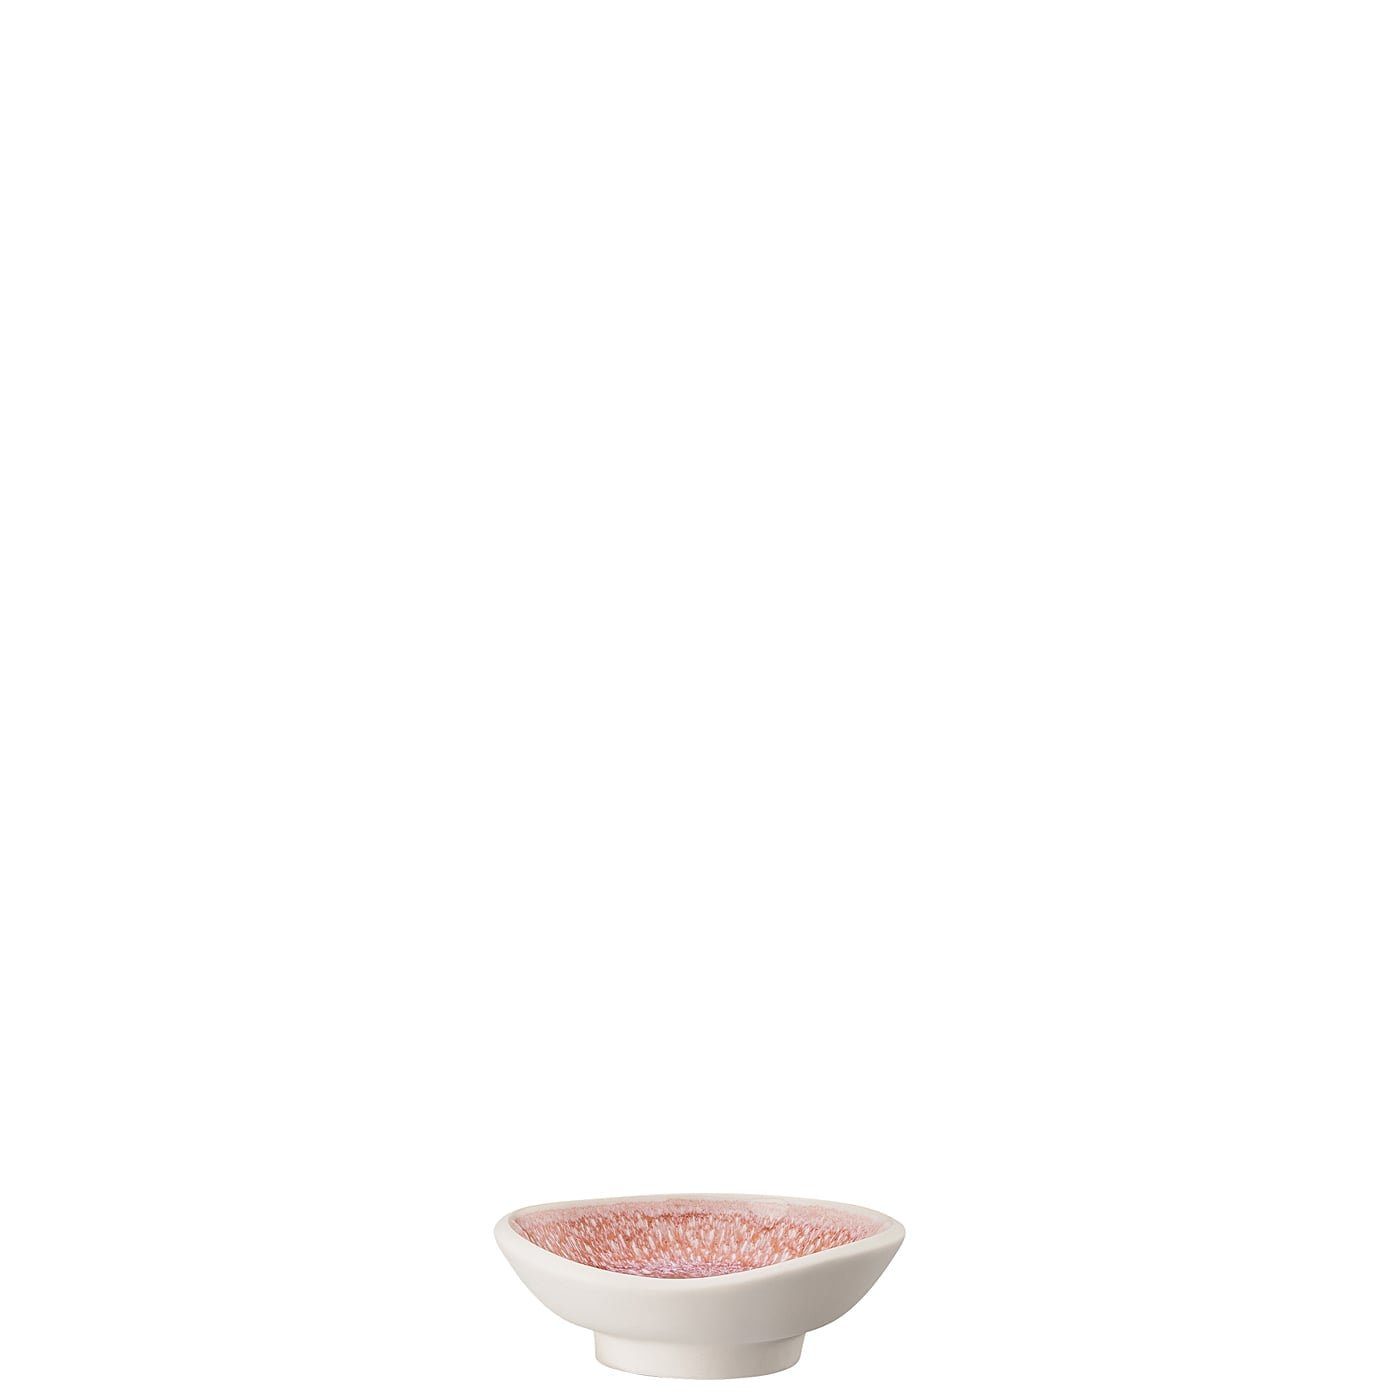 Rosenthal Schale Quartz Steinzeug, cm, 10 Bowl Junto mikrowellengeeignet Rose